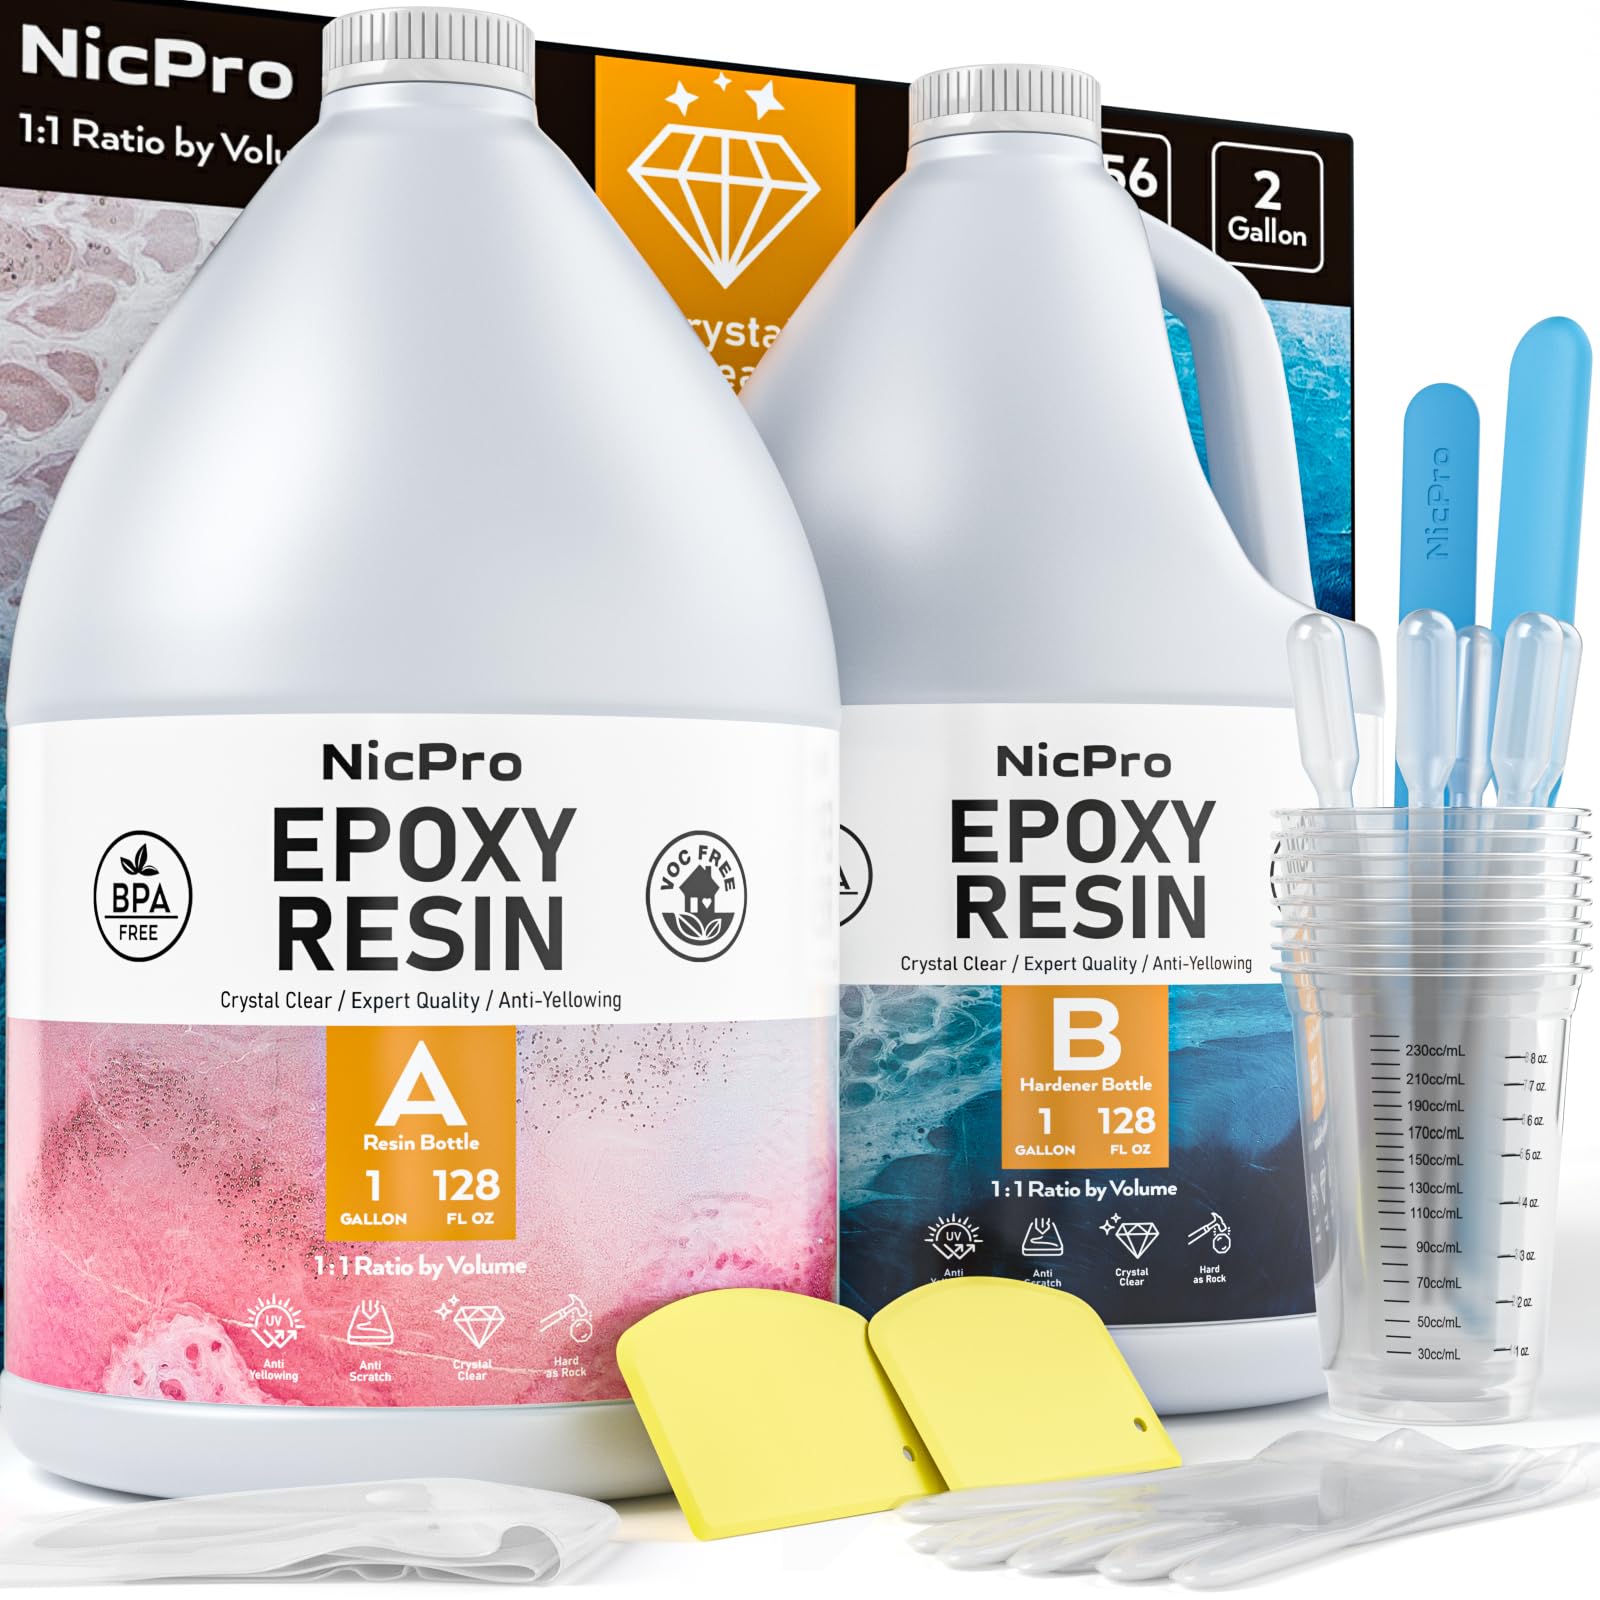 0.75 Gallon Deep Pour Epoxy Resin Kit High Gloss Bubble Free 2 to